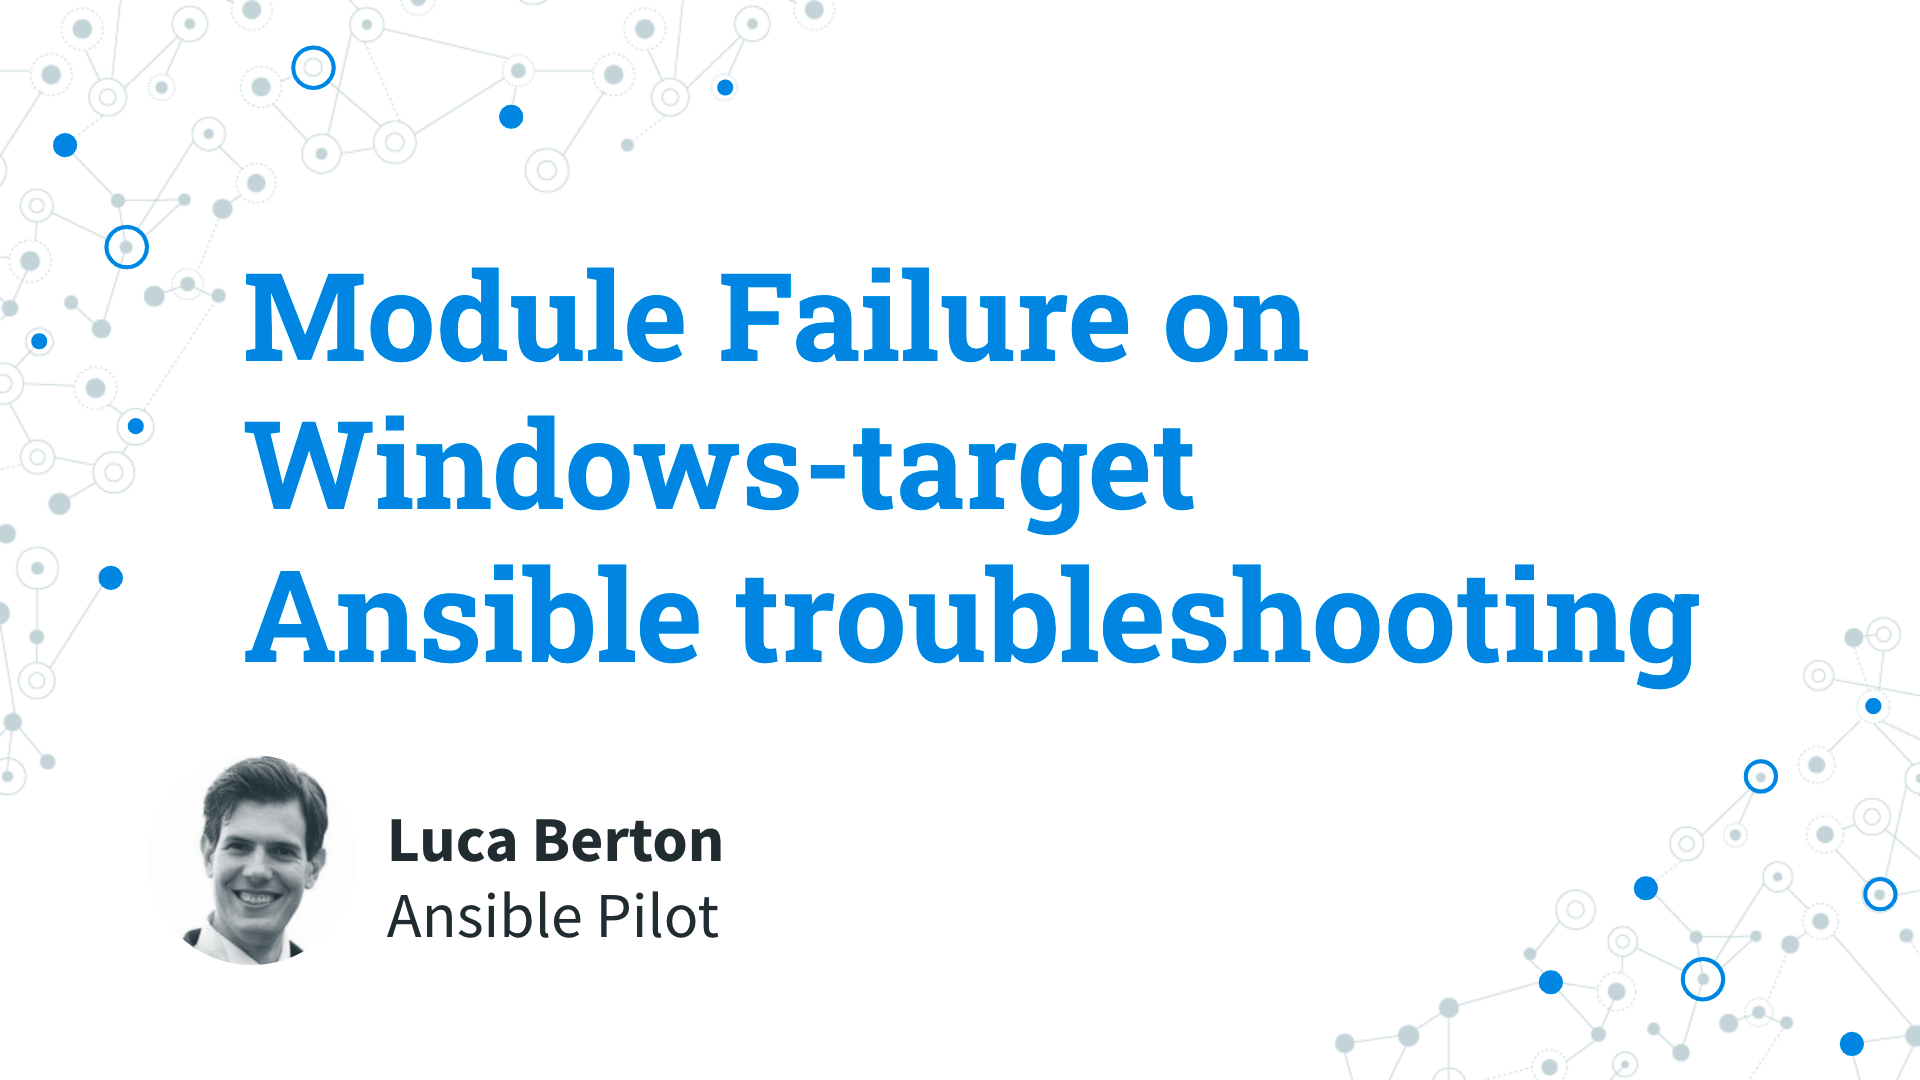 Ansible troubleshooting - Module Failure on Windows-target